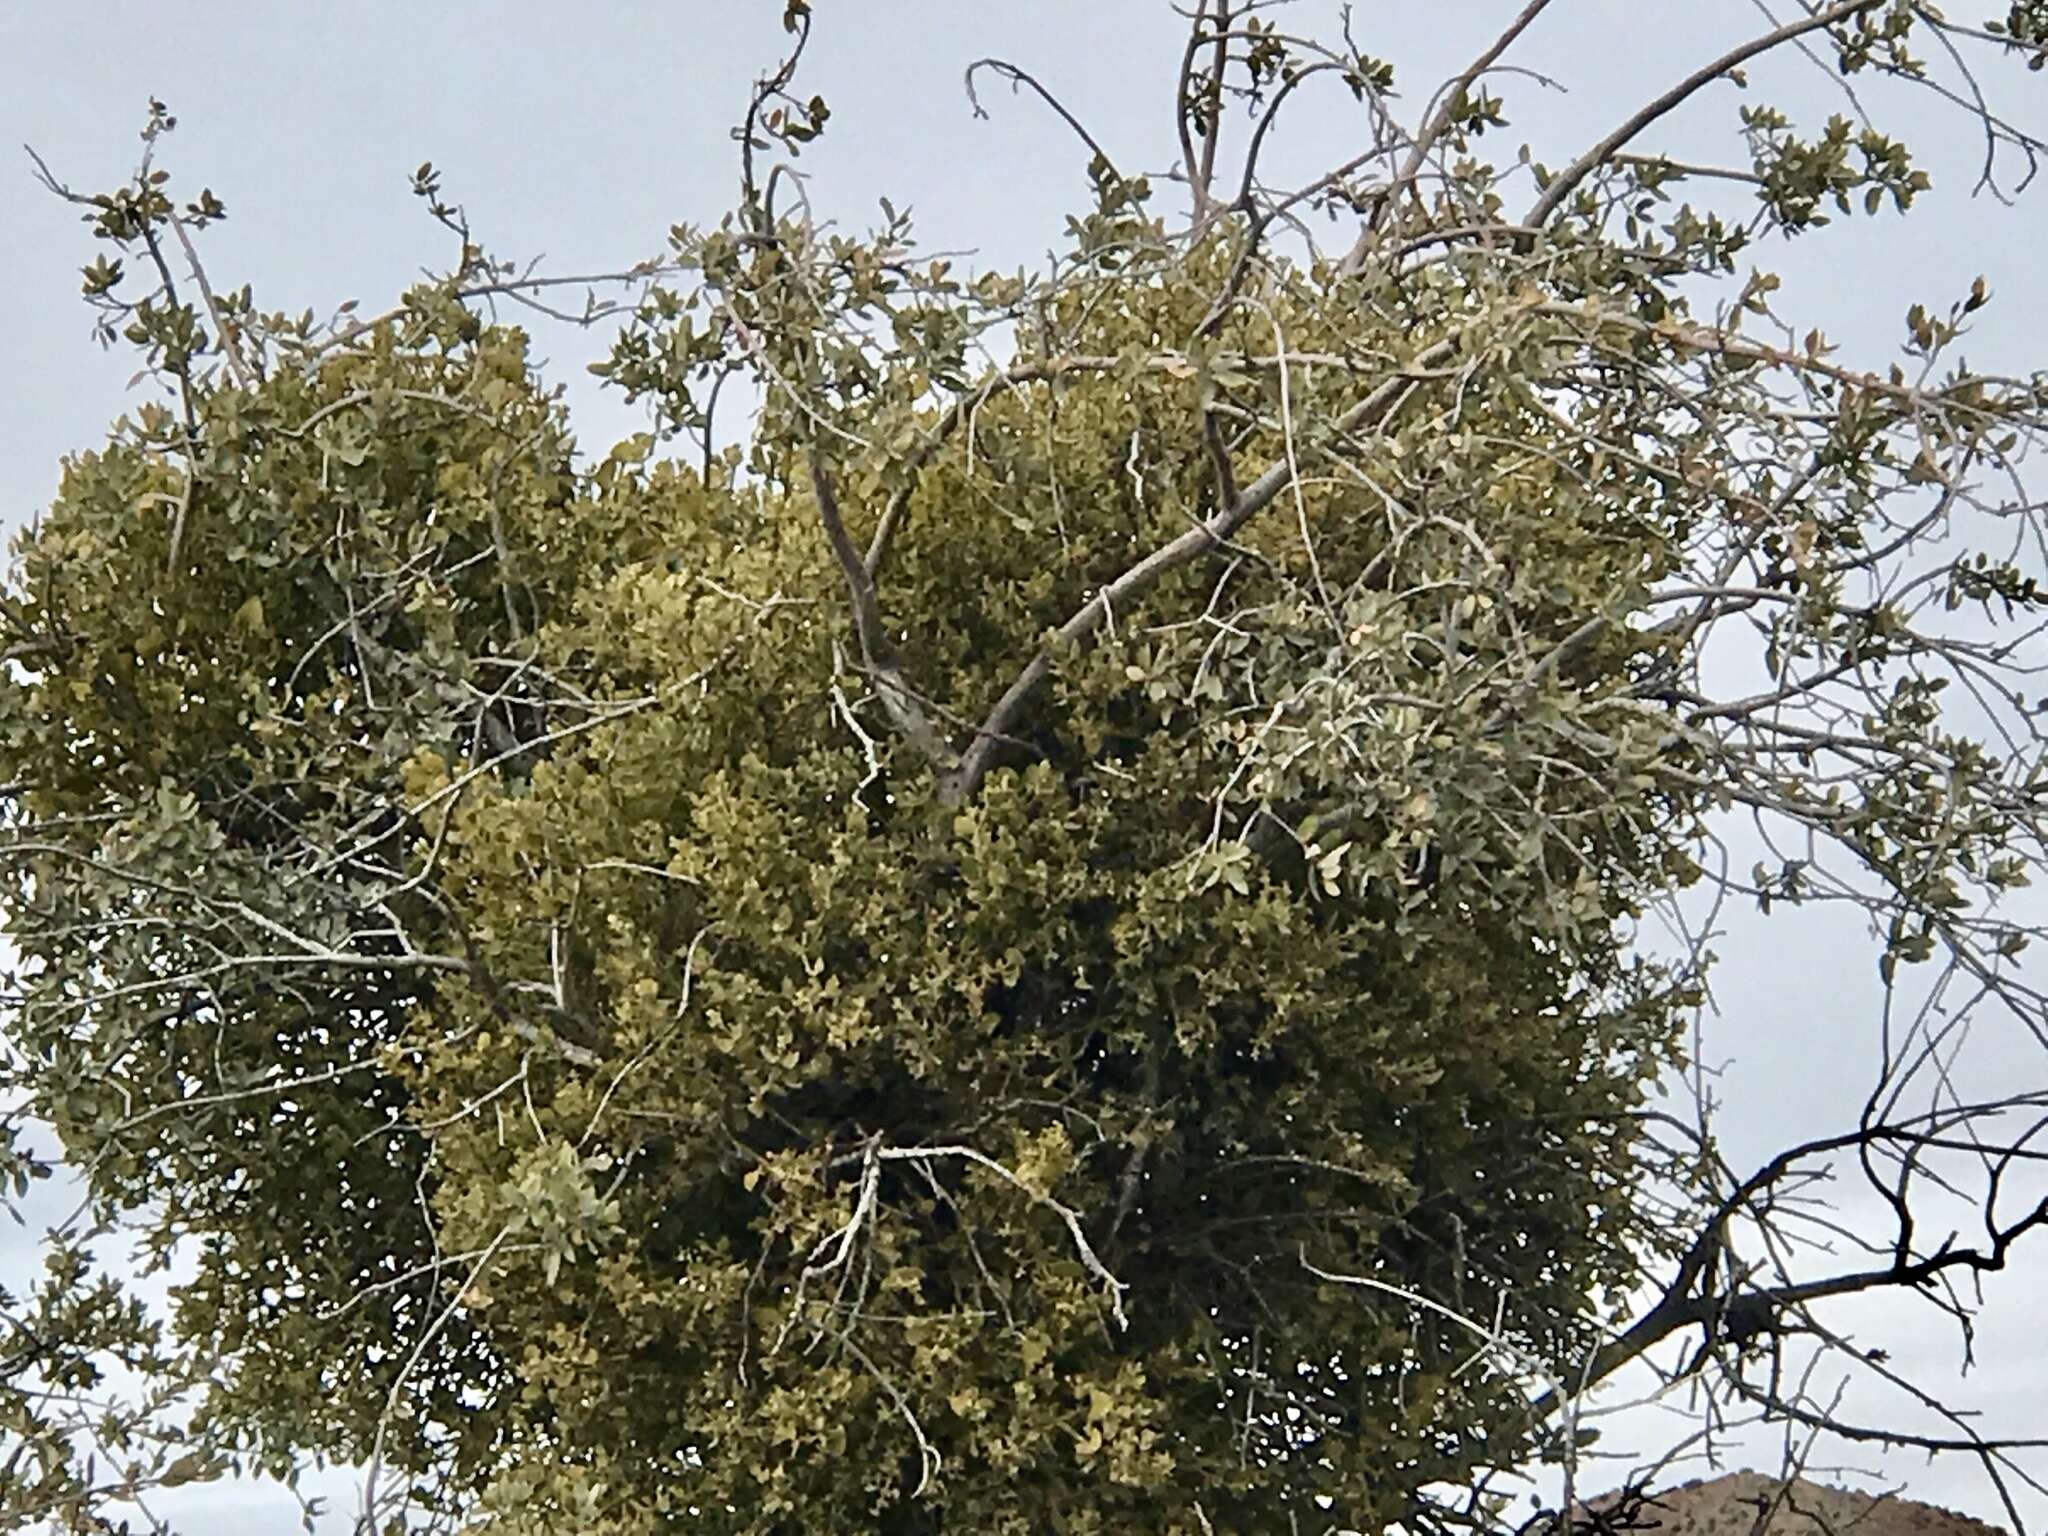 Image of Cory's mistletoe